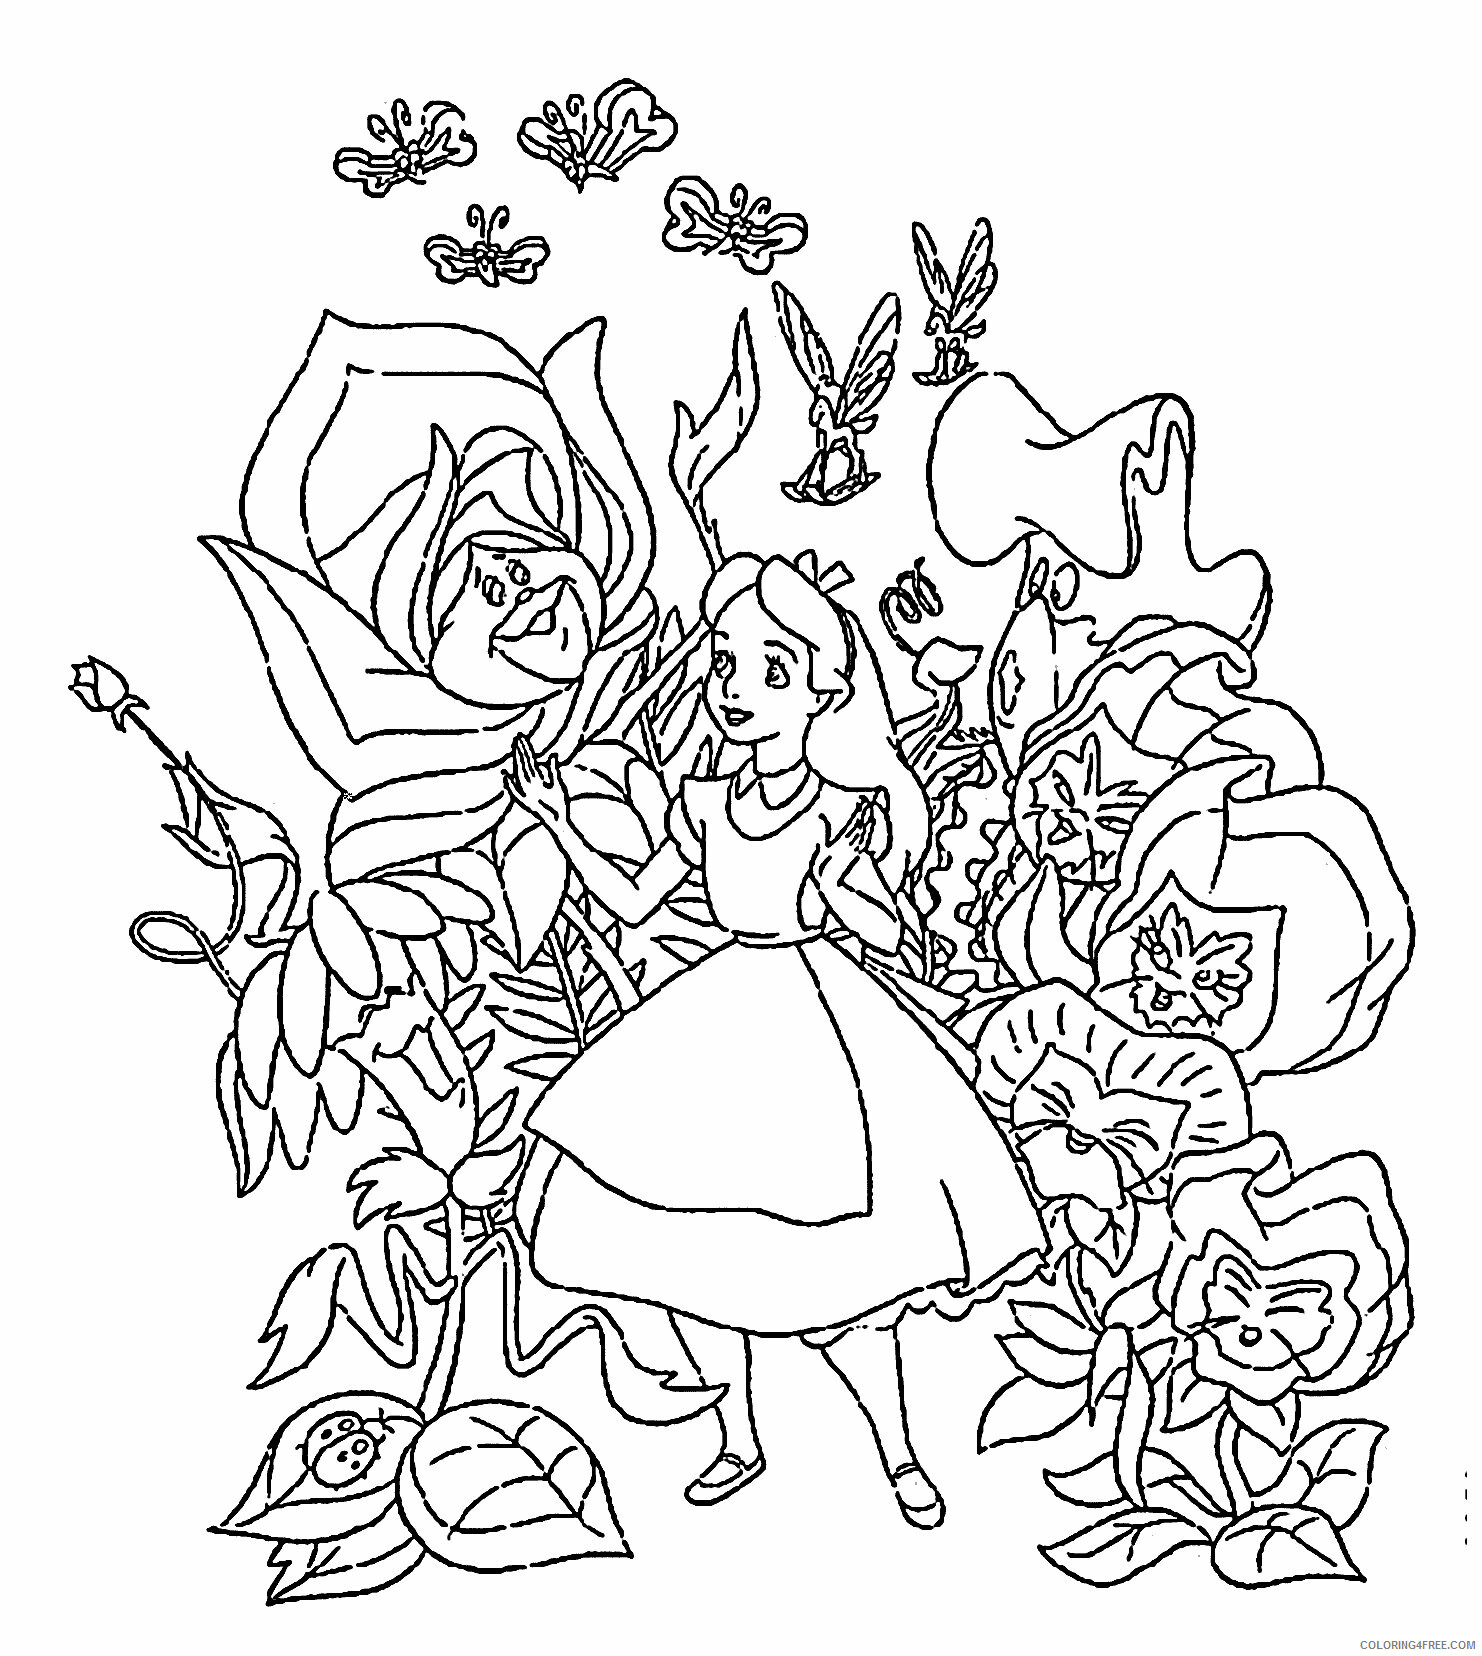 Alice in Wonderland Coloring Book Printable Sheets Alice in Wonderland Pinterest 2021 a 3556 Coloring4free